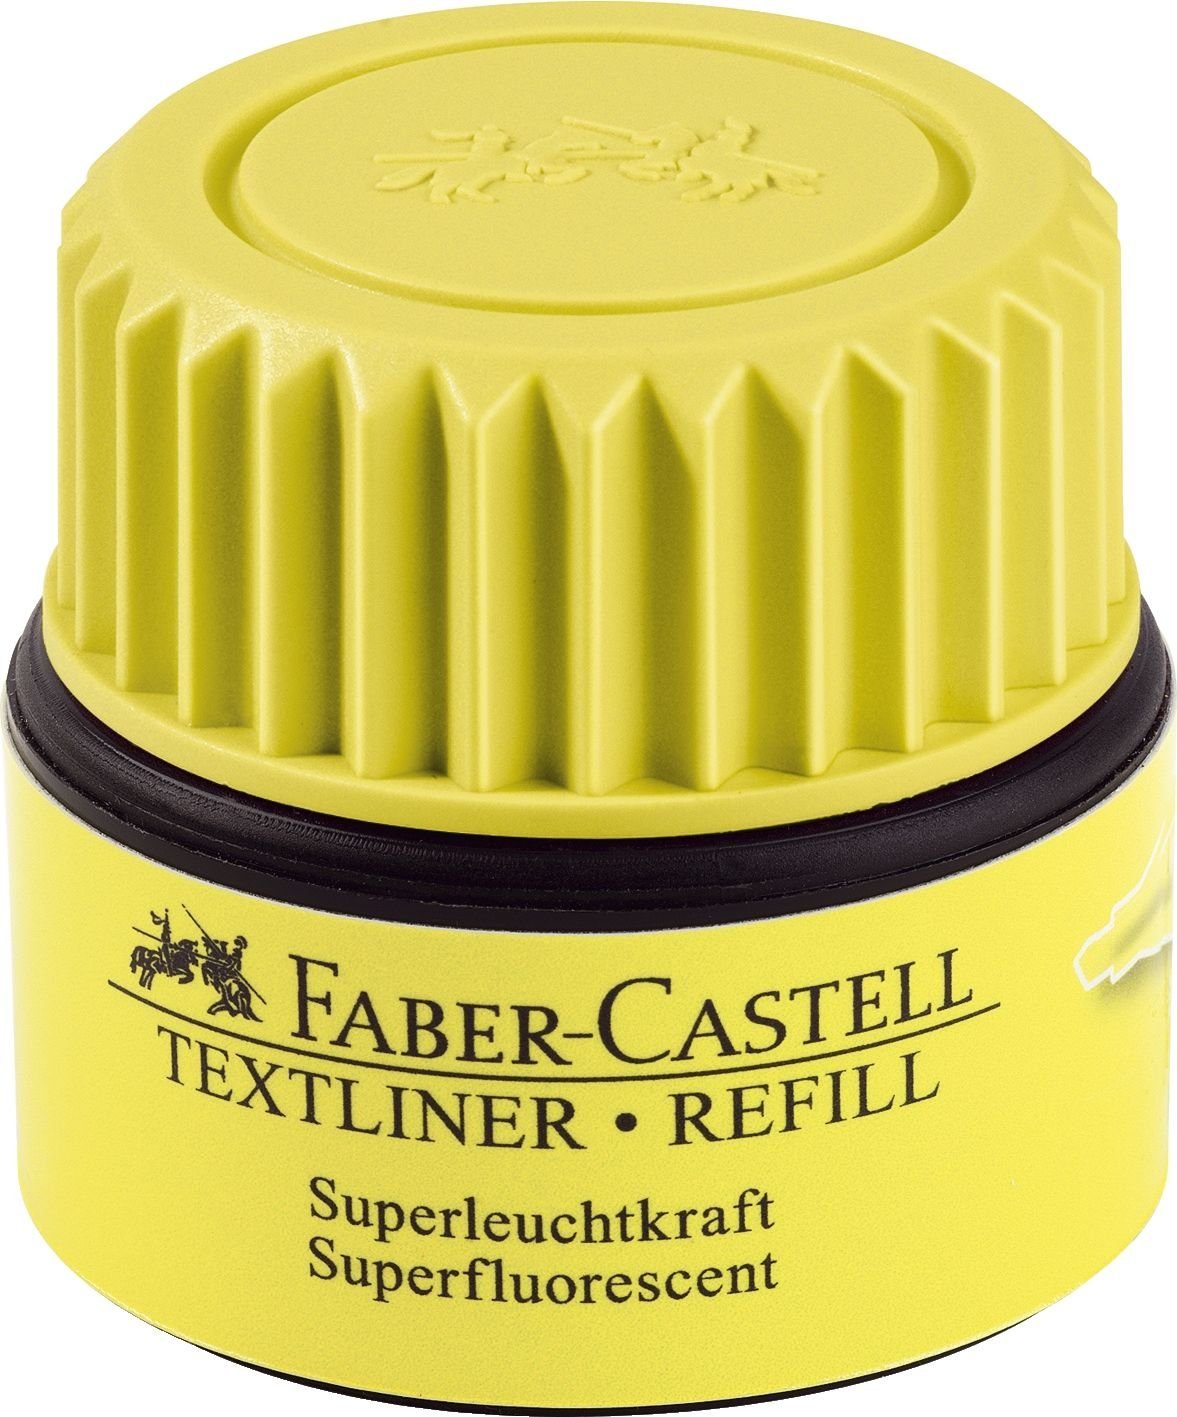 Faber-Castell Dekokissen FABER-CASTELL Nachfüll-Station TEXTLINER 1549, leuchtgelb